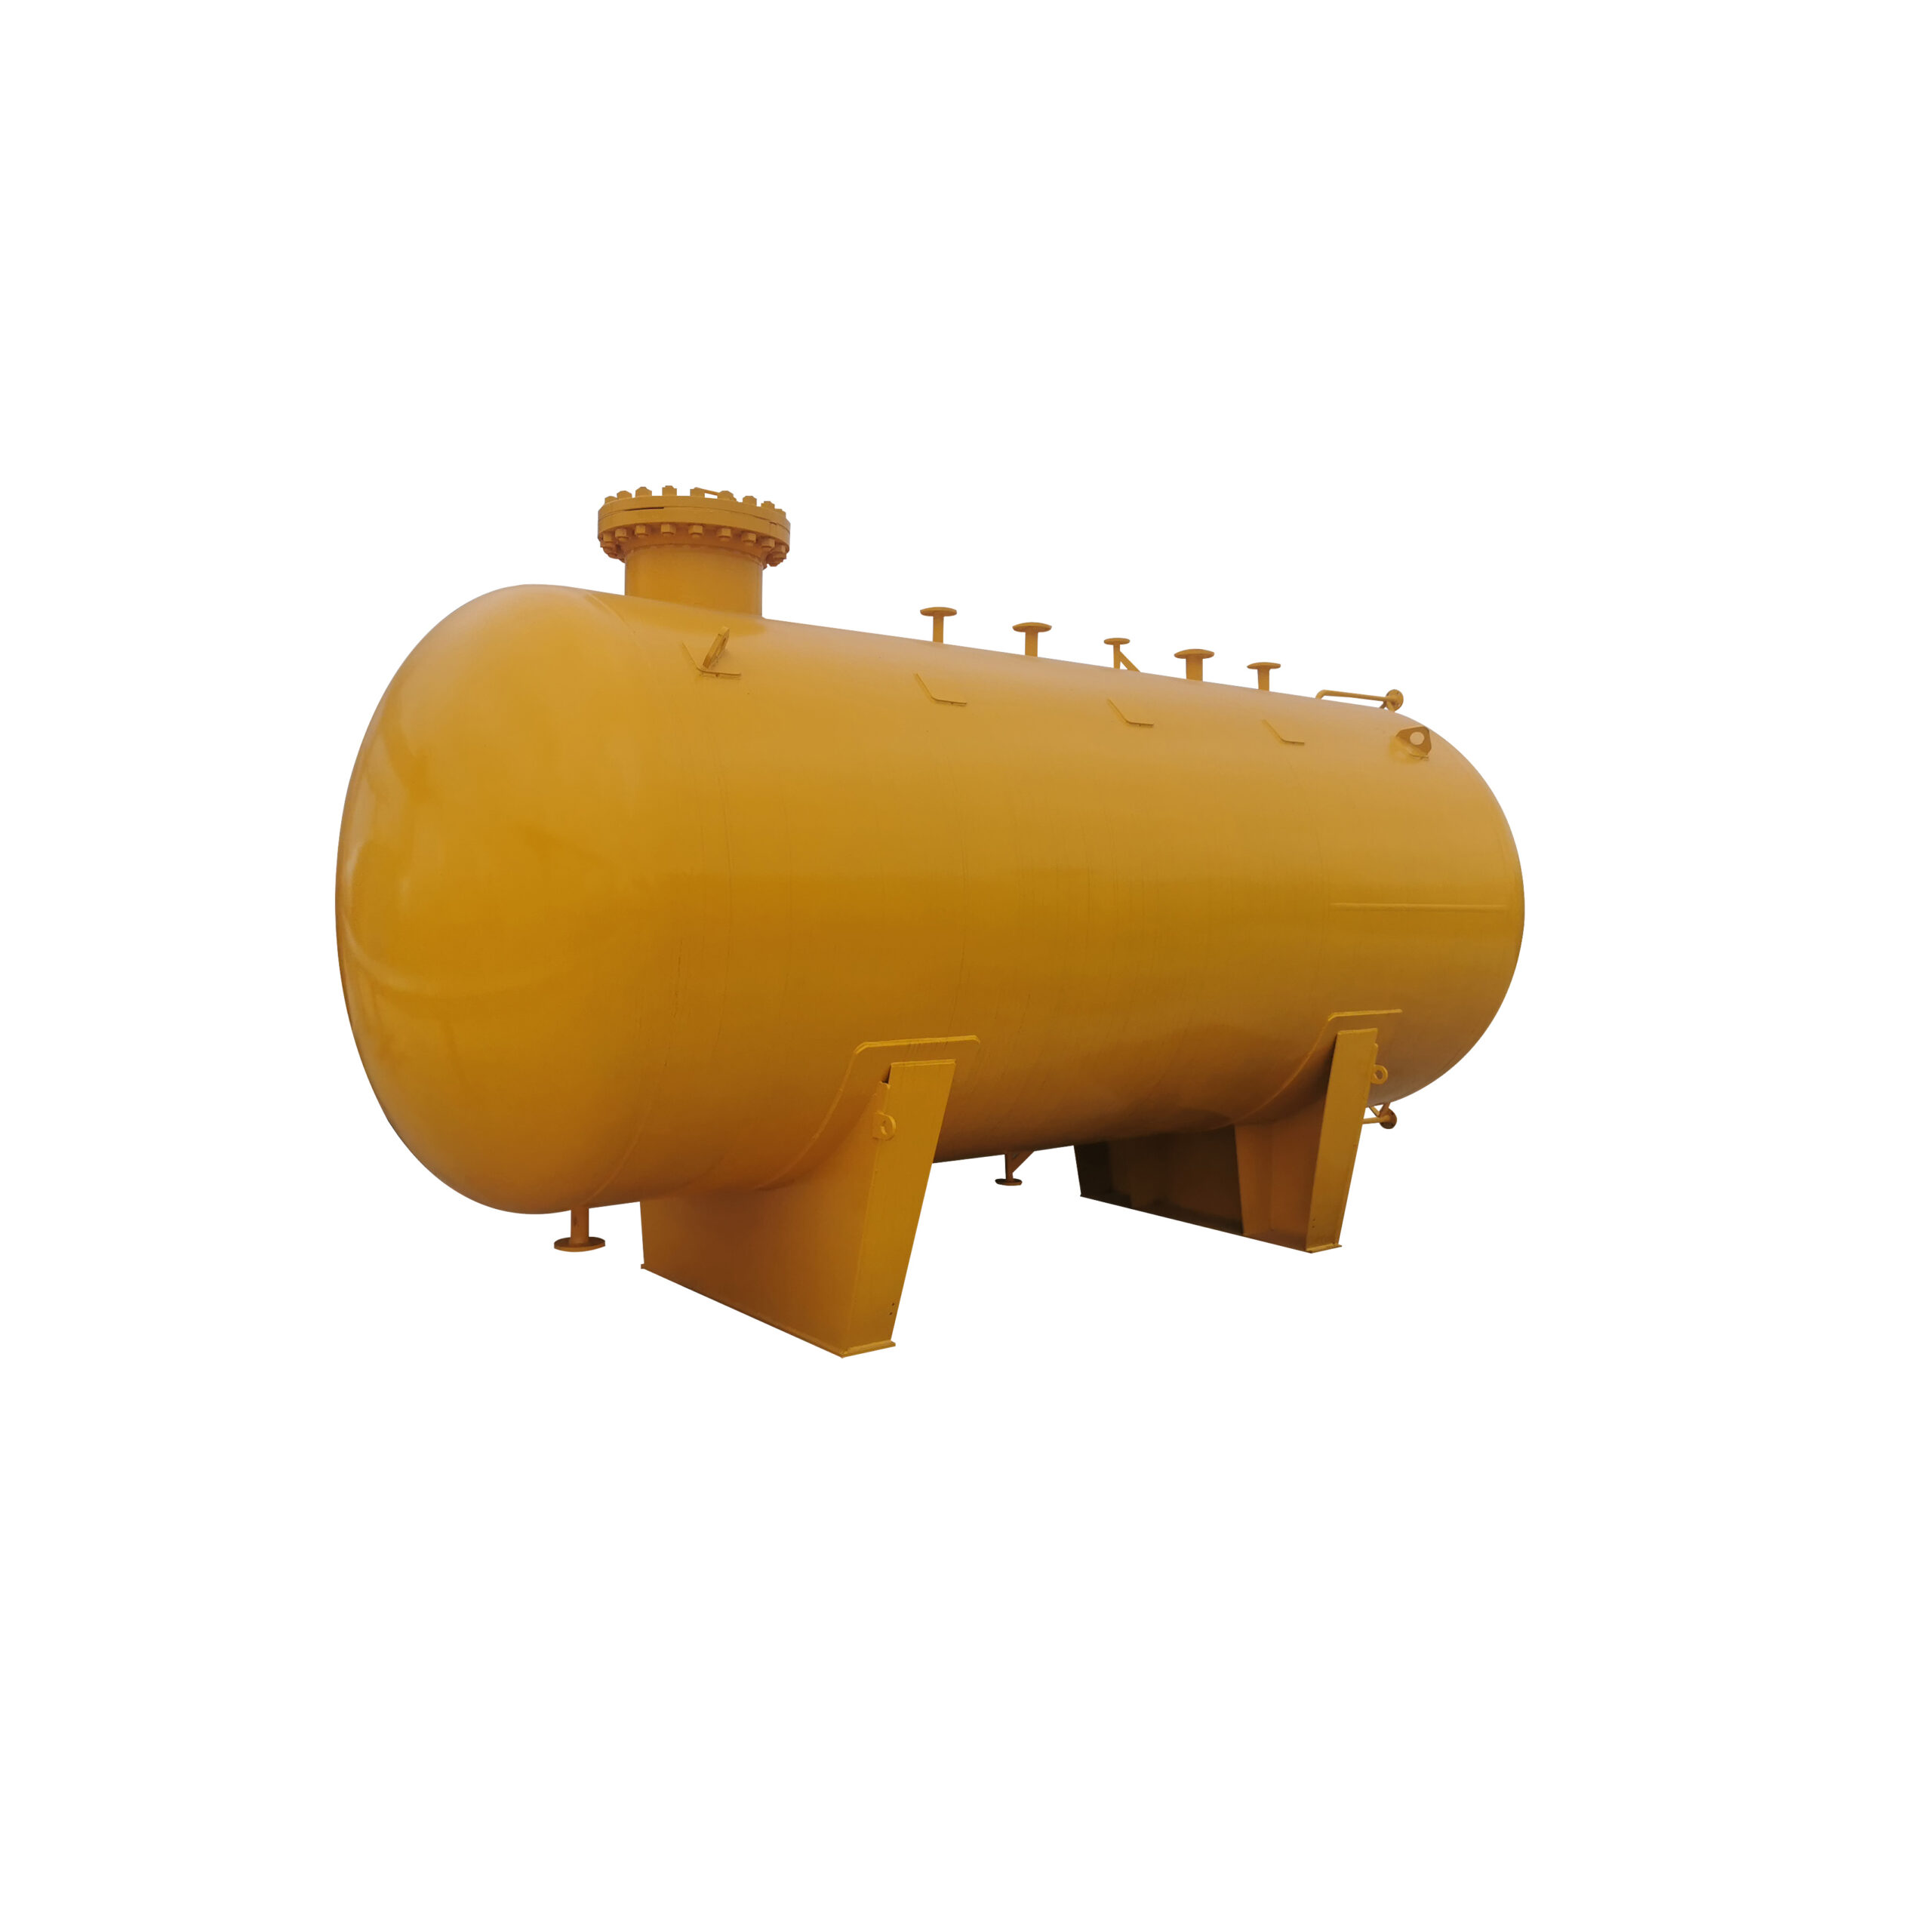 Main material of liquefied petroleum gas storage tank